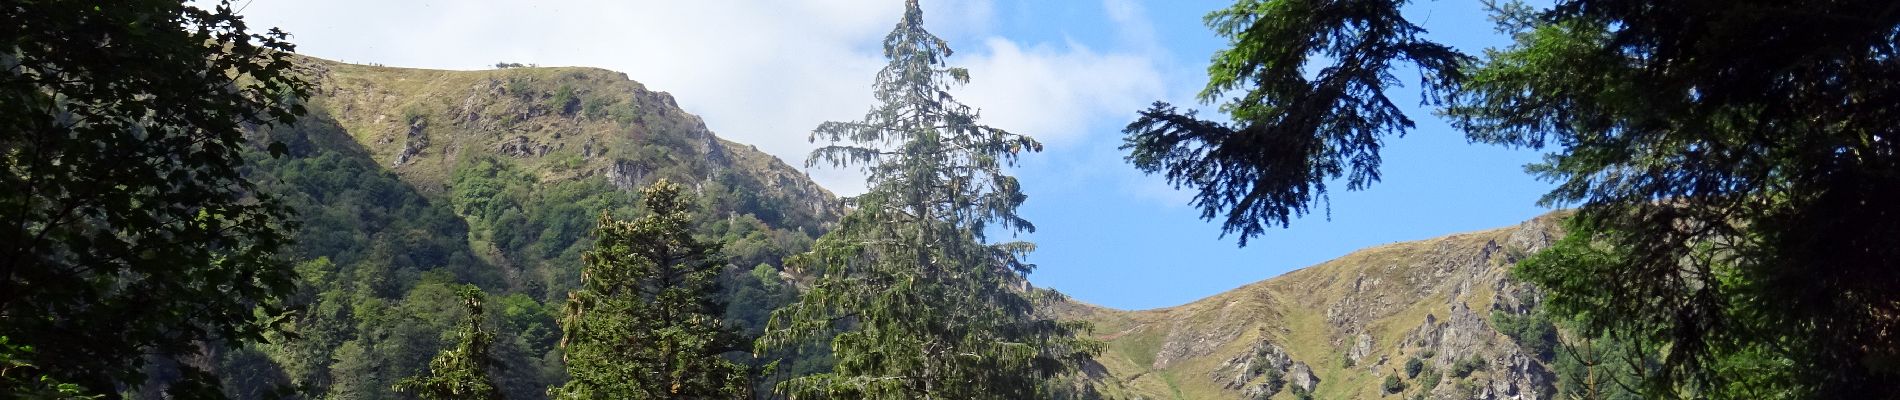 Randonnée Randonnée équestre Stosswihr - 2018-08-26 Picnic CVA Cascades Stosswihr - Photo